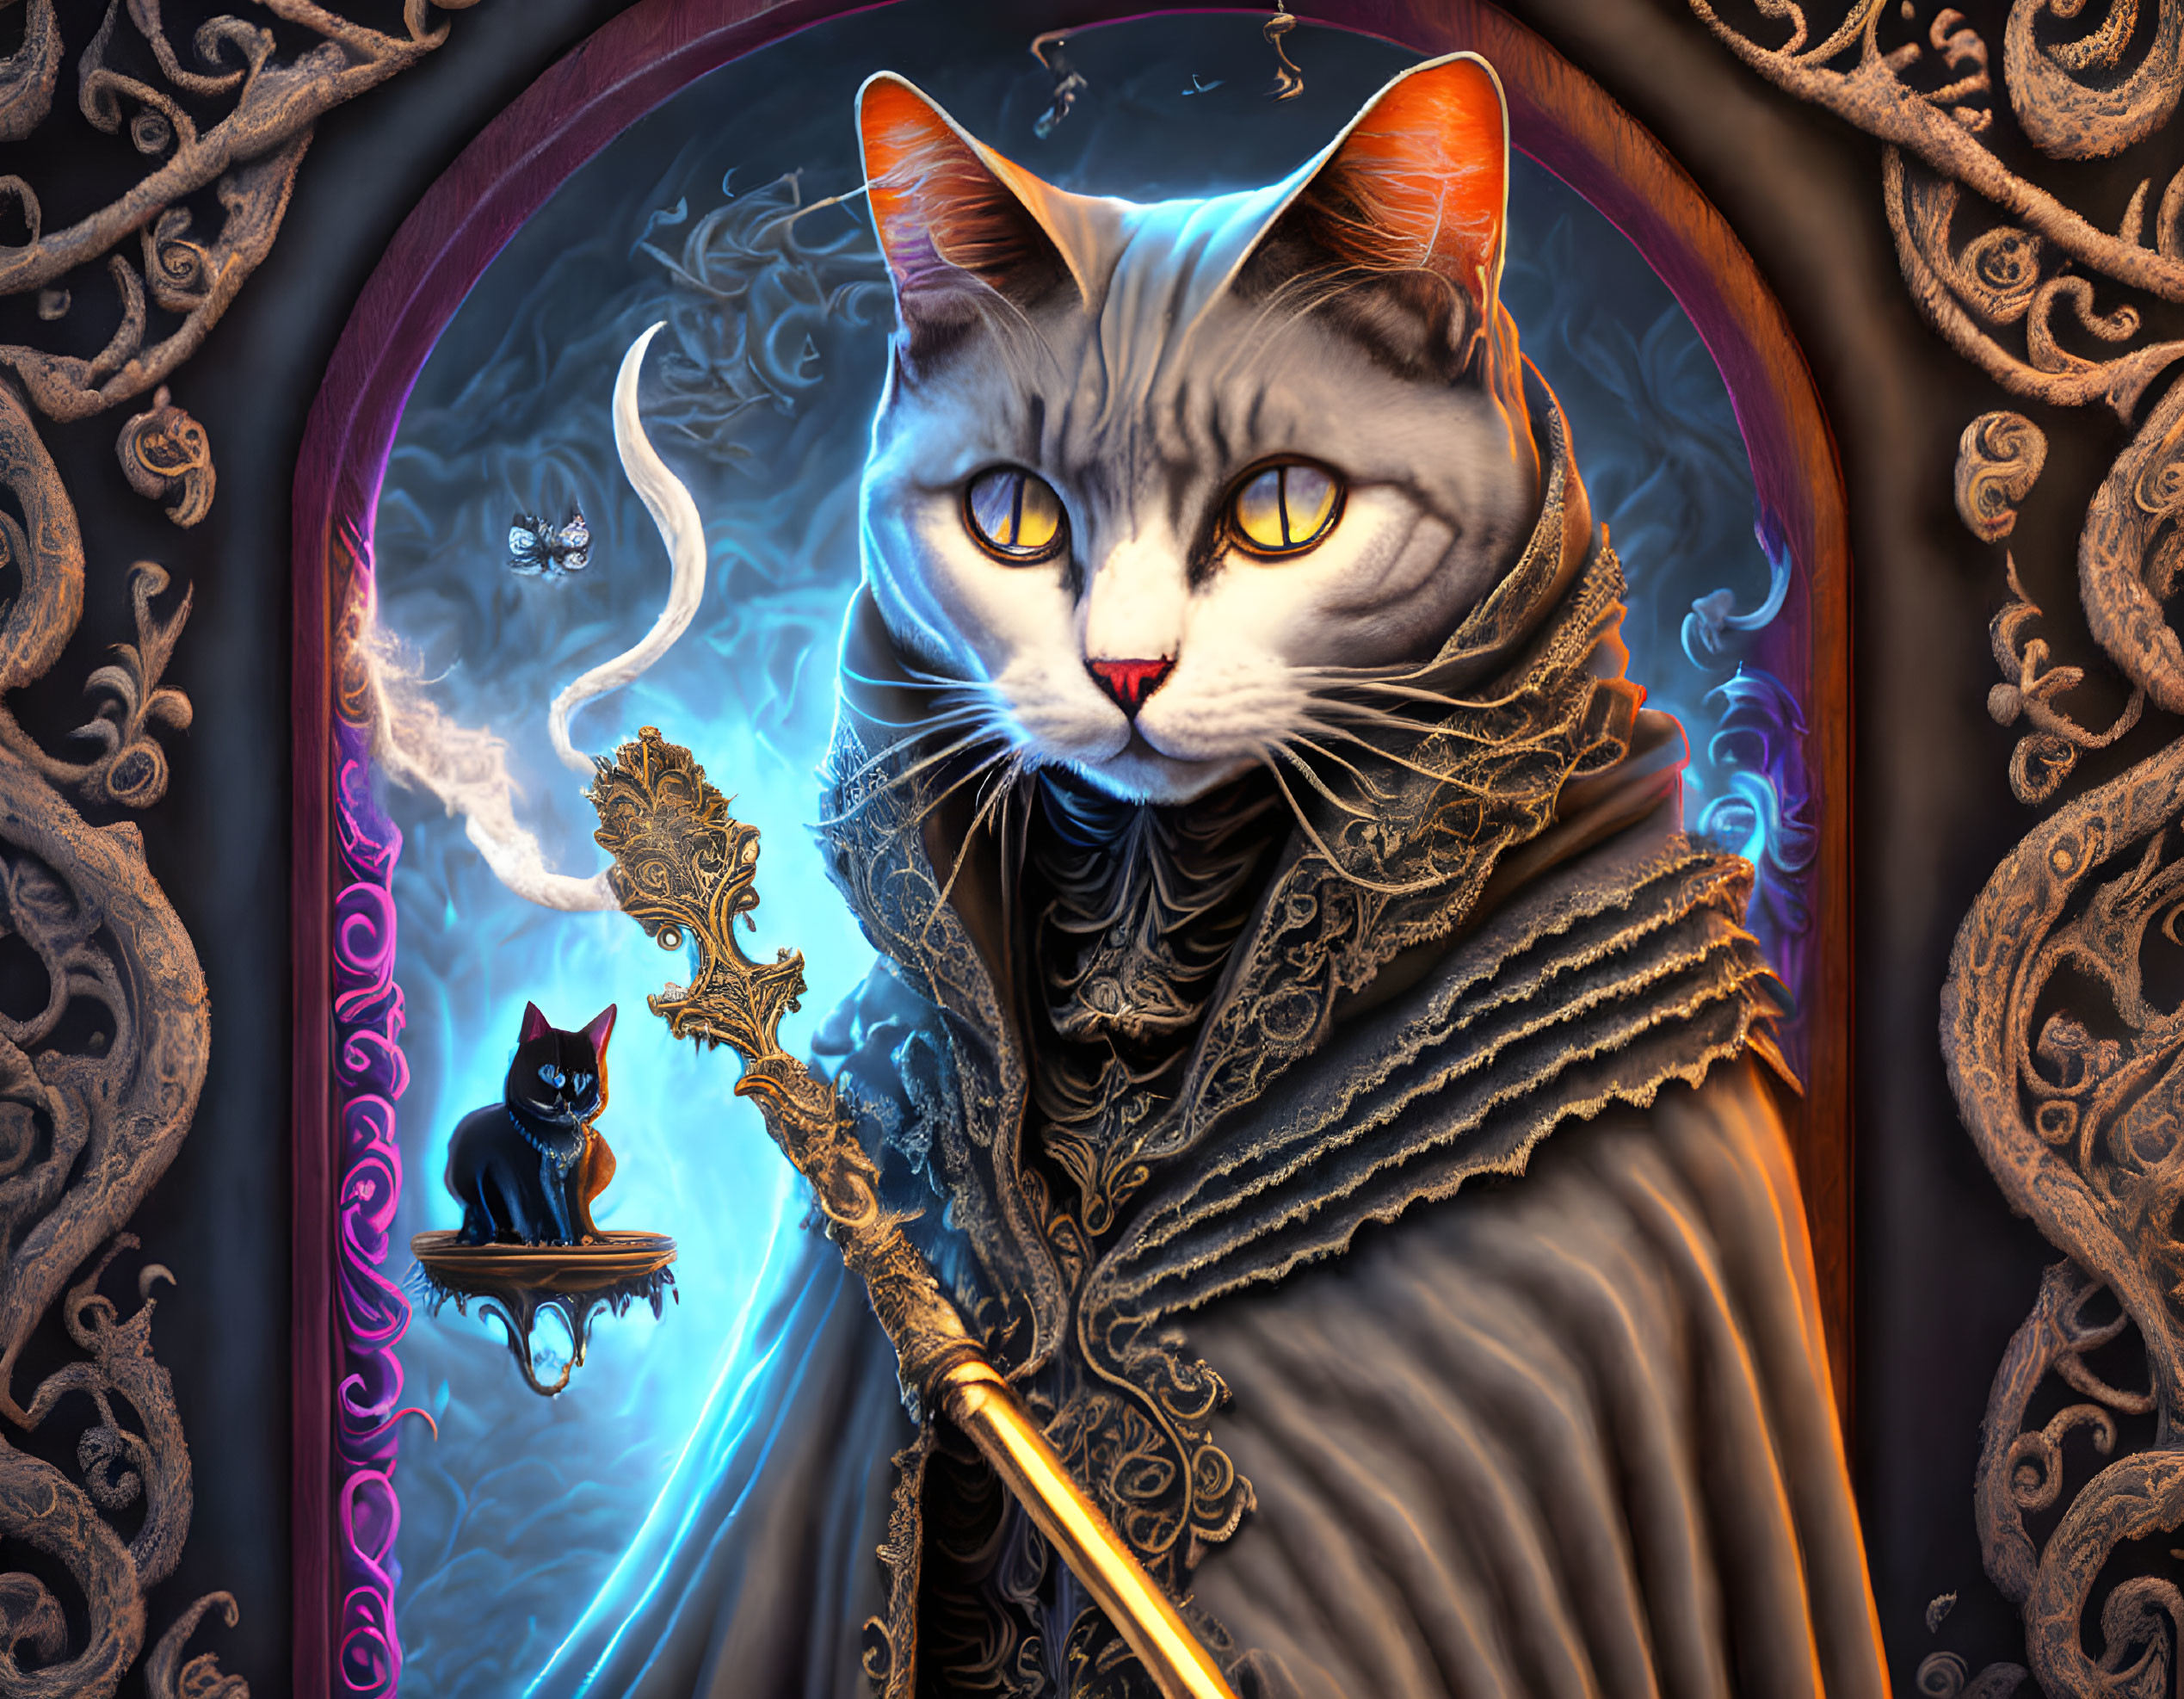 Fantasy artwork of majestic cat in regal cloak with mystical backdrop